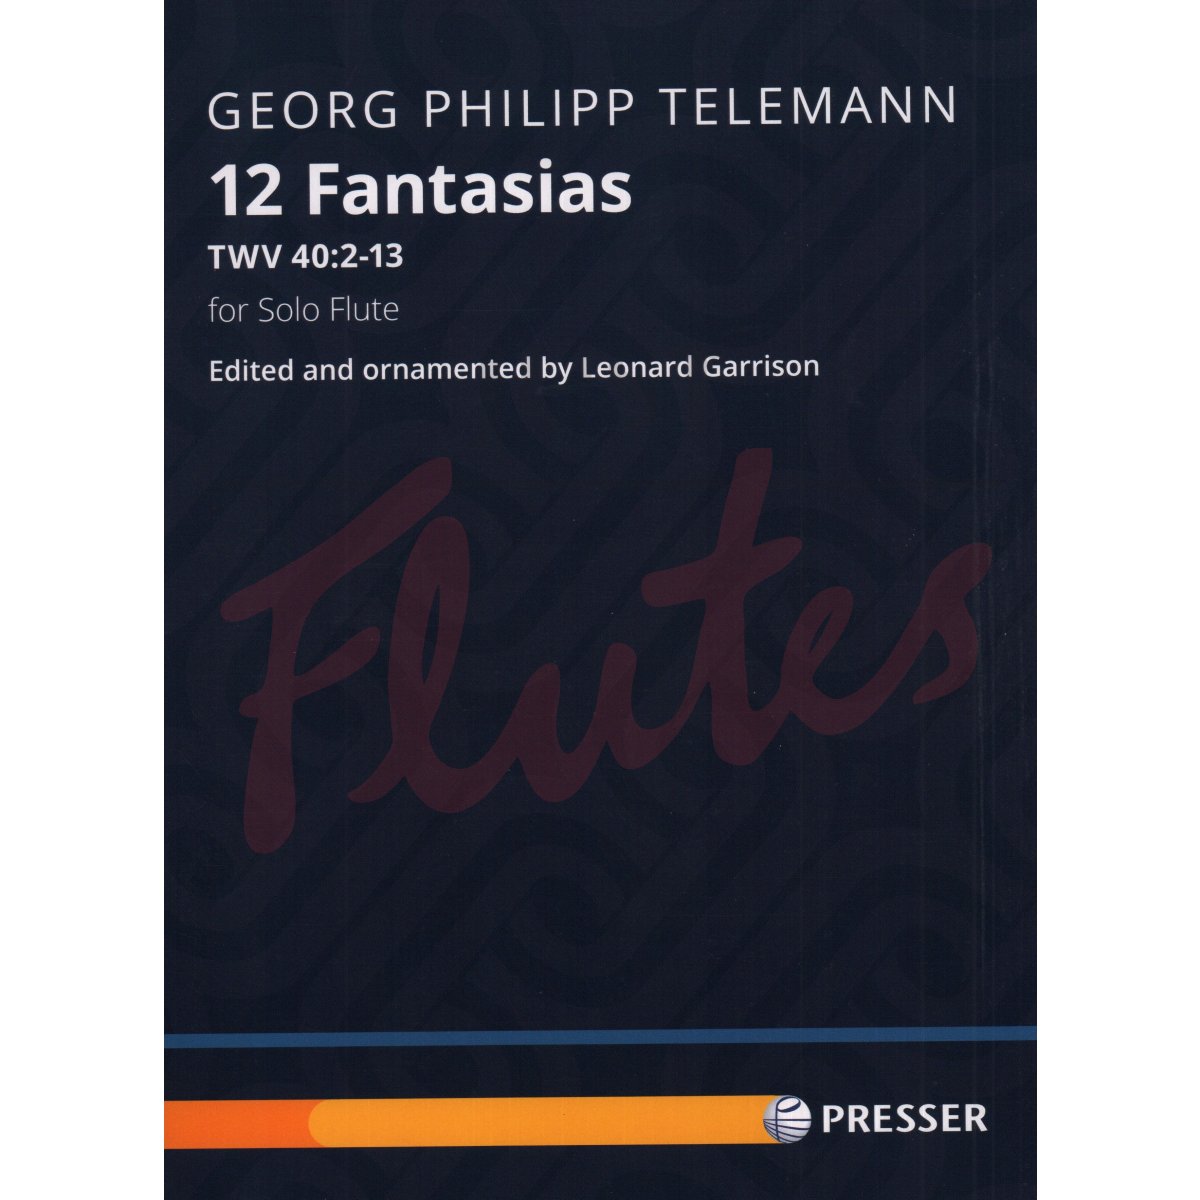 12 Fantasias for Solo Flute